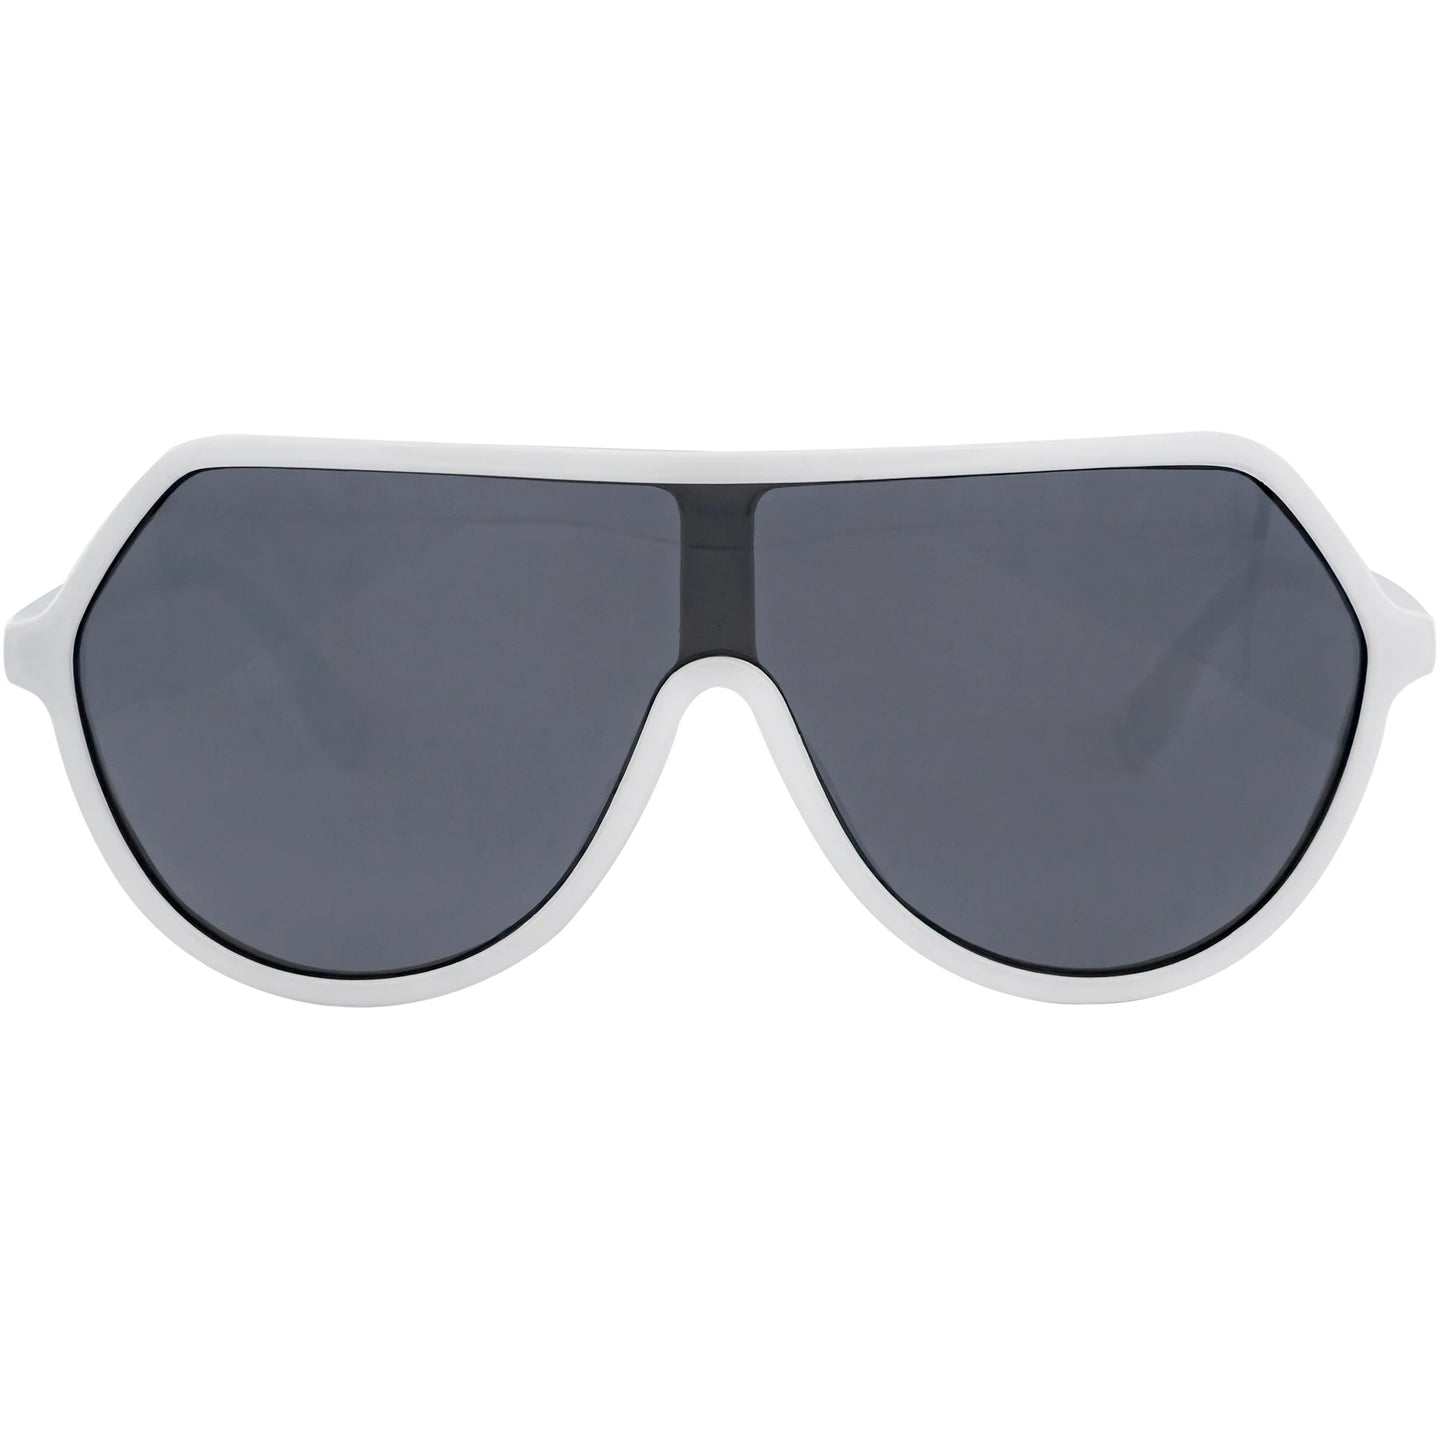 Oversize Retro Flat Top Aviator Fashion Sunglasses